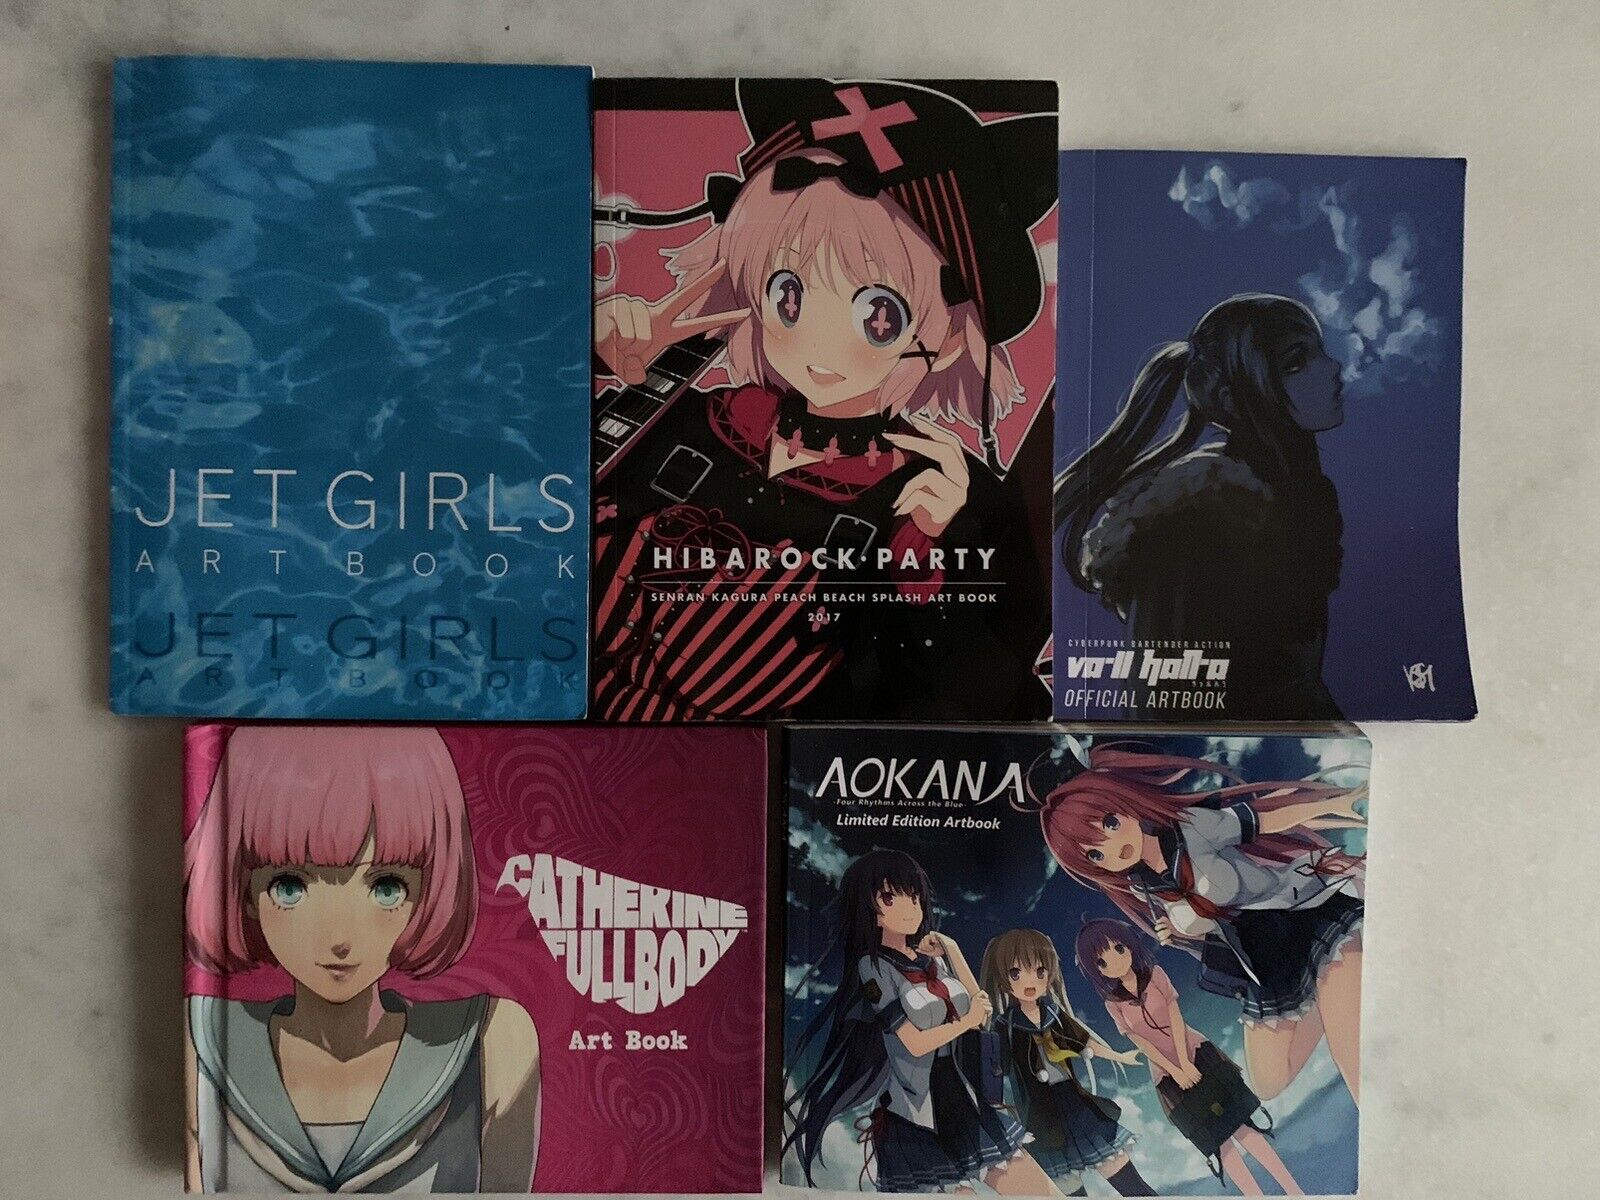 Anime Video Game Art Books: Jet Girls,Catherine Fullbody,Aokana,Va-11 Hall-A, +